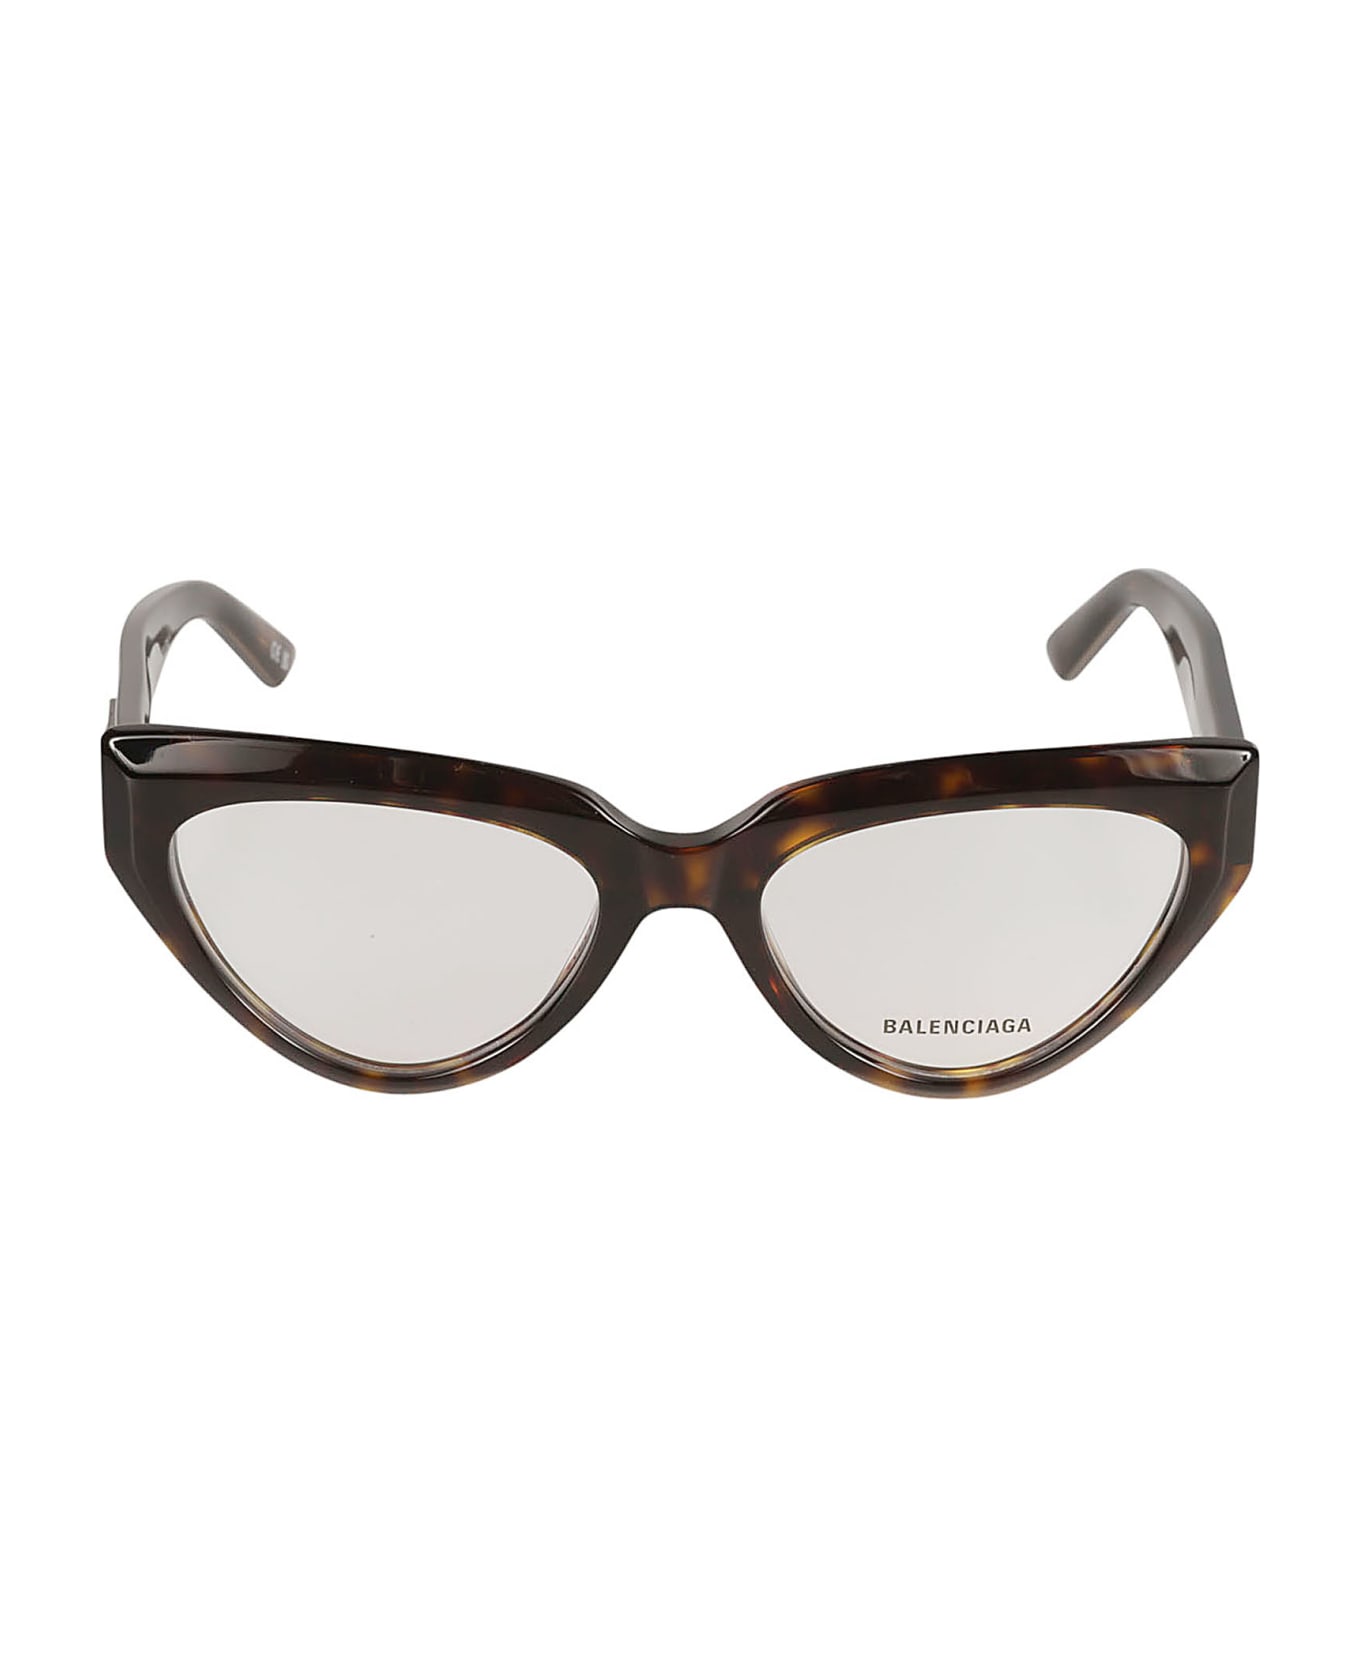 Balenciaga Eyewear Bb Plaque Cat Eye Frame Glasses - Havana/Transparent